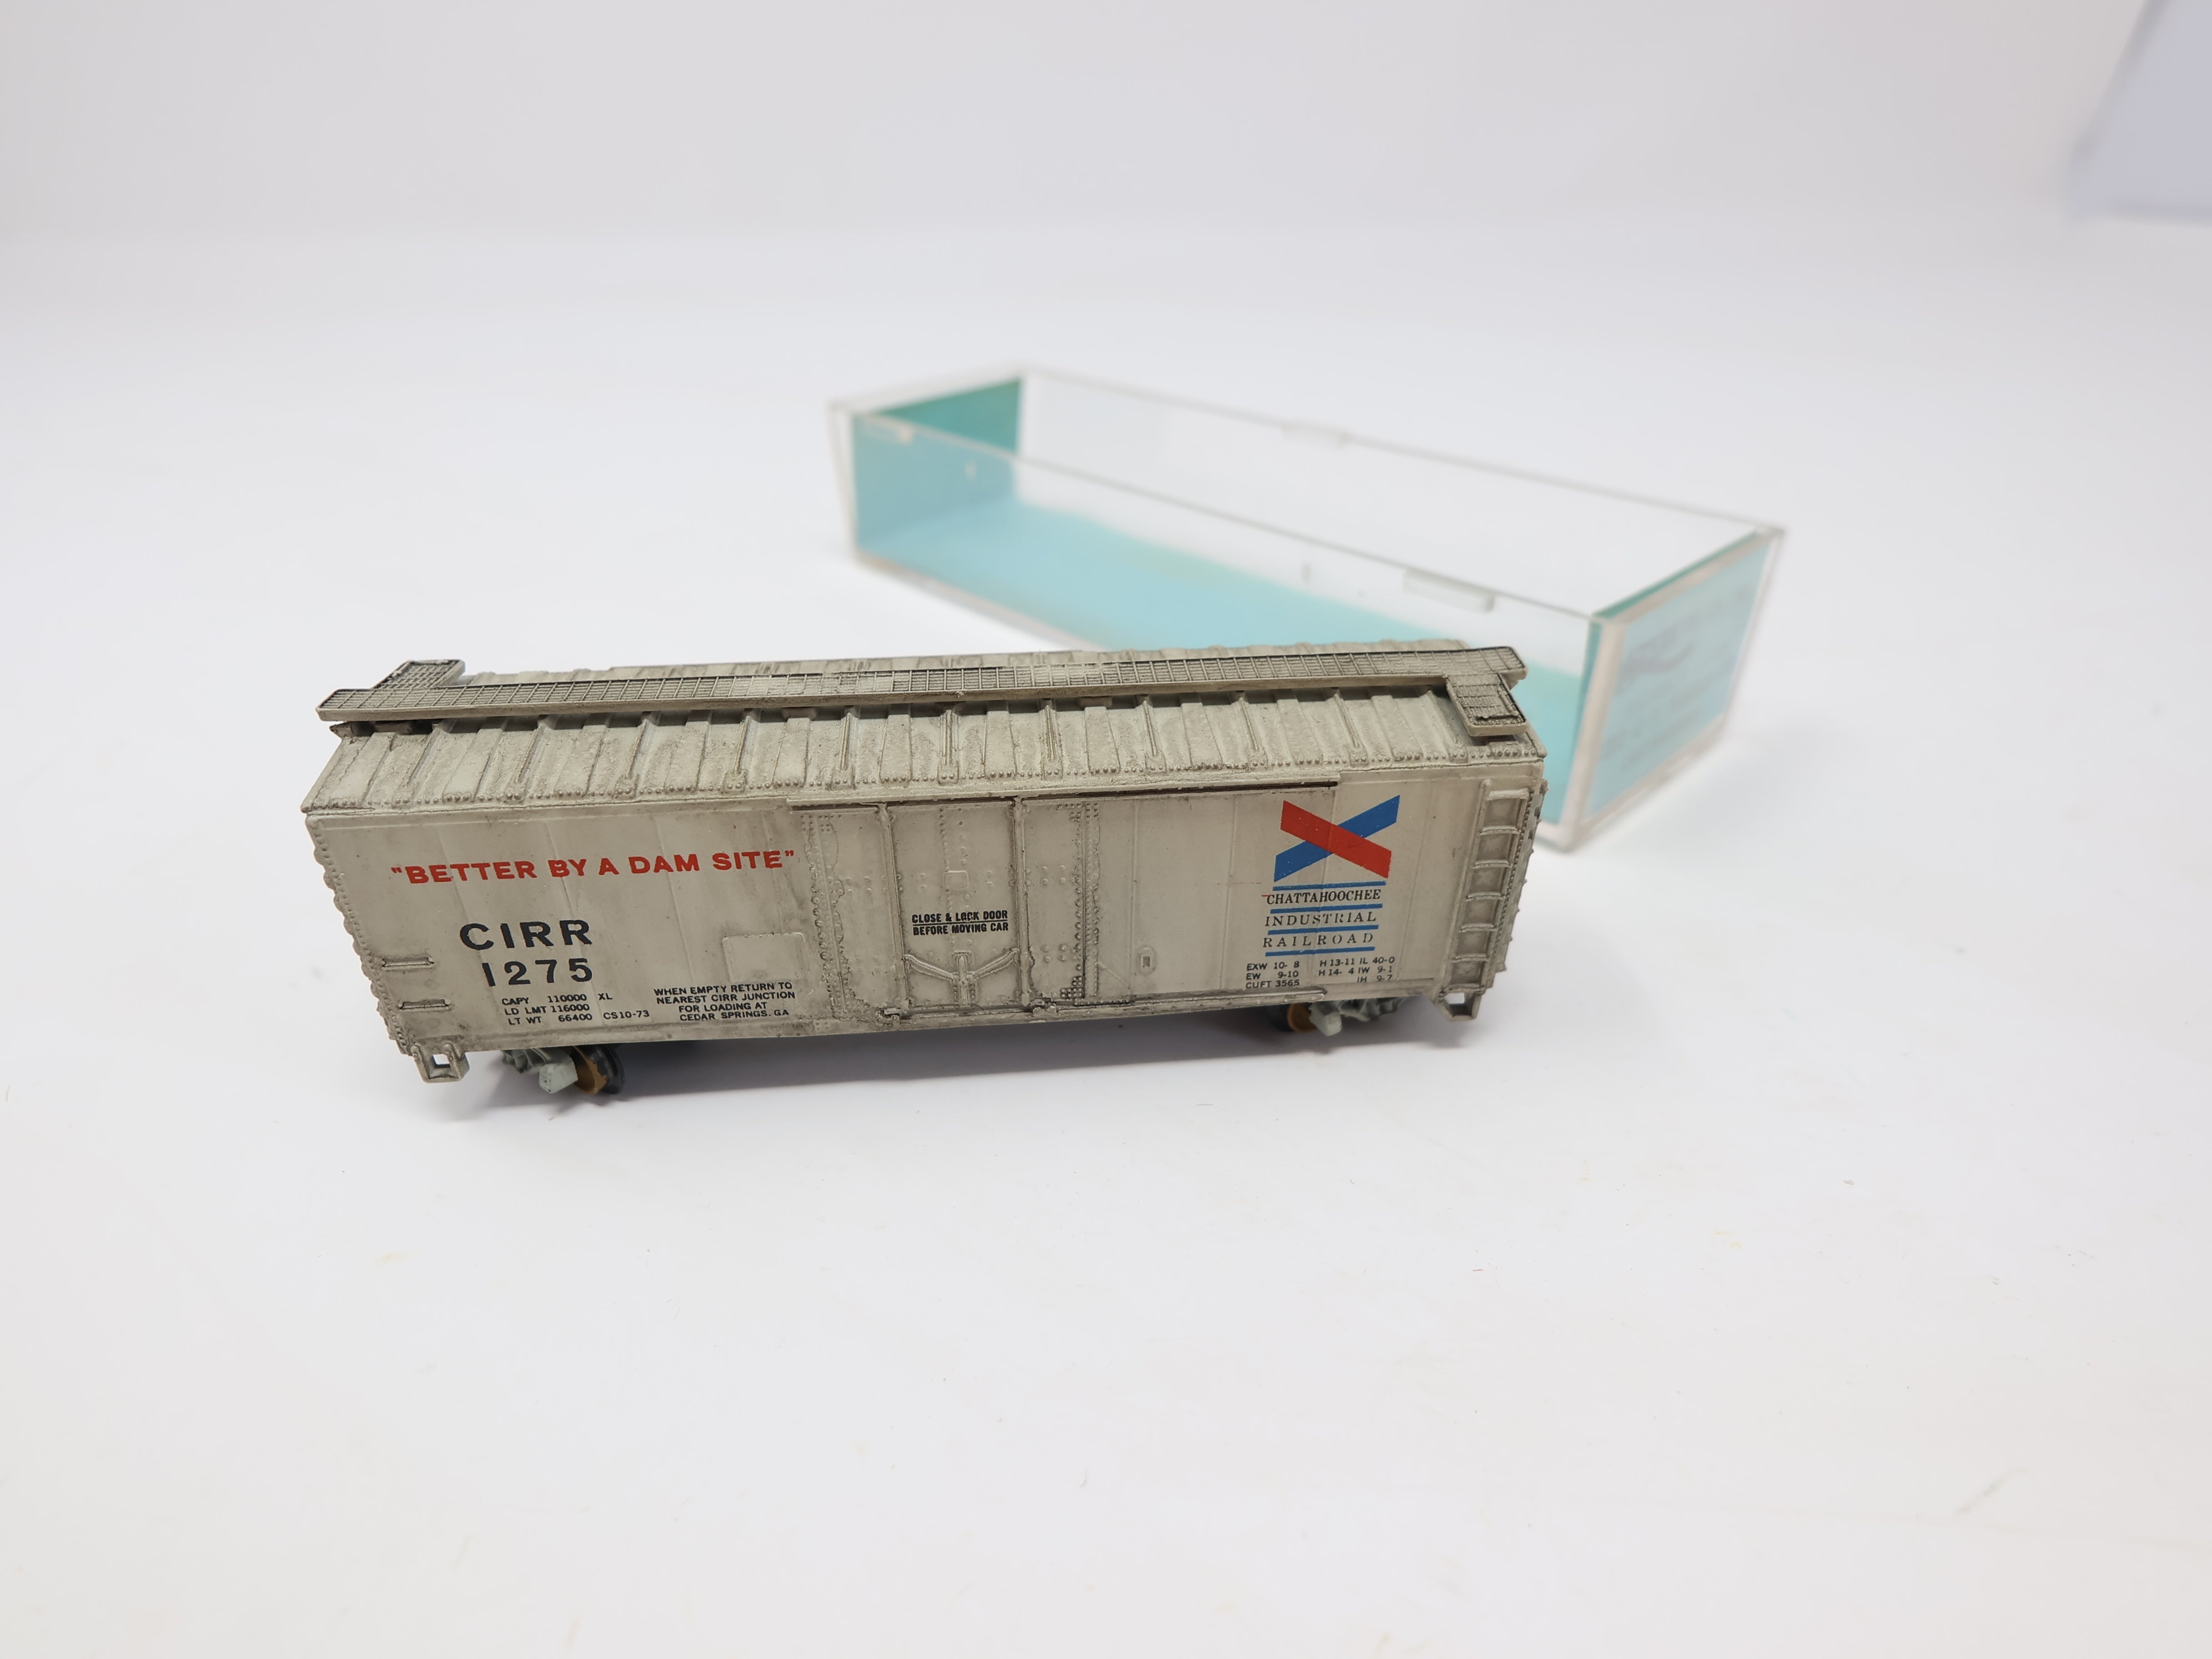 USED Atlas N Scale, 40' Plug Door Box Car, Chattahoochee Industrial Railroad CIRR #1275, Weathered